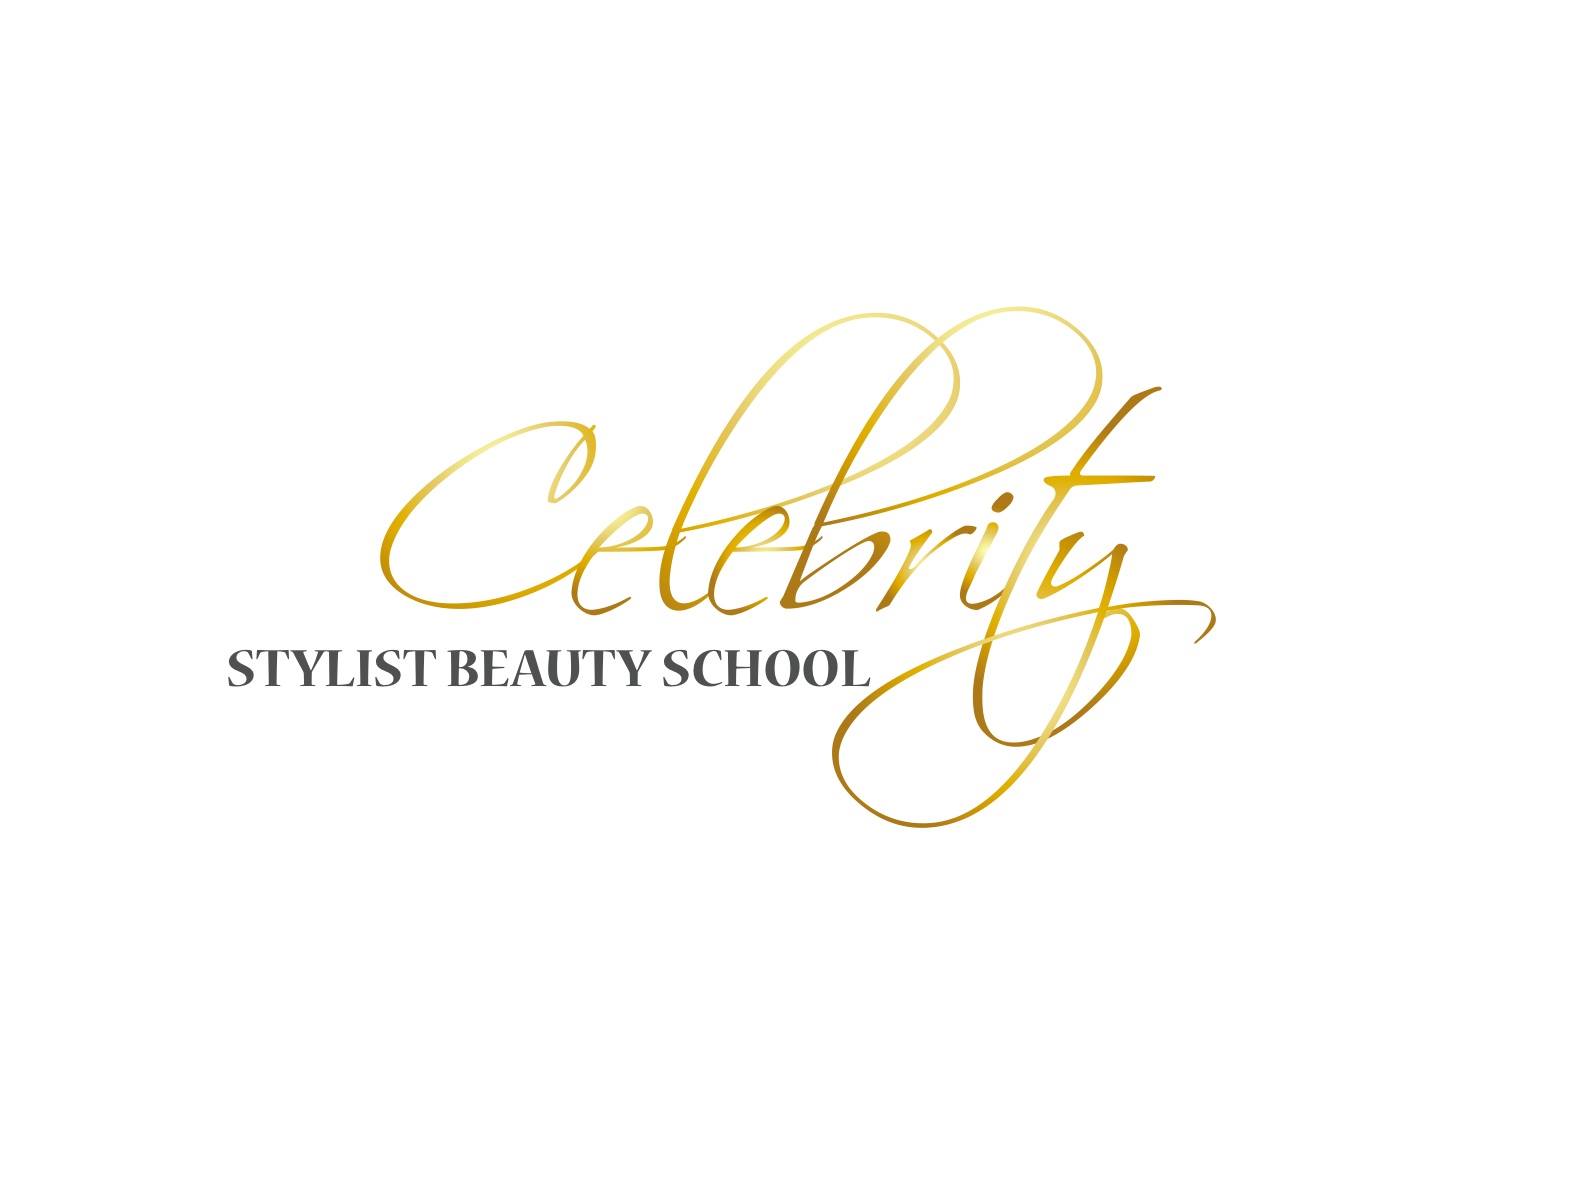 celebrity logo